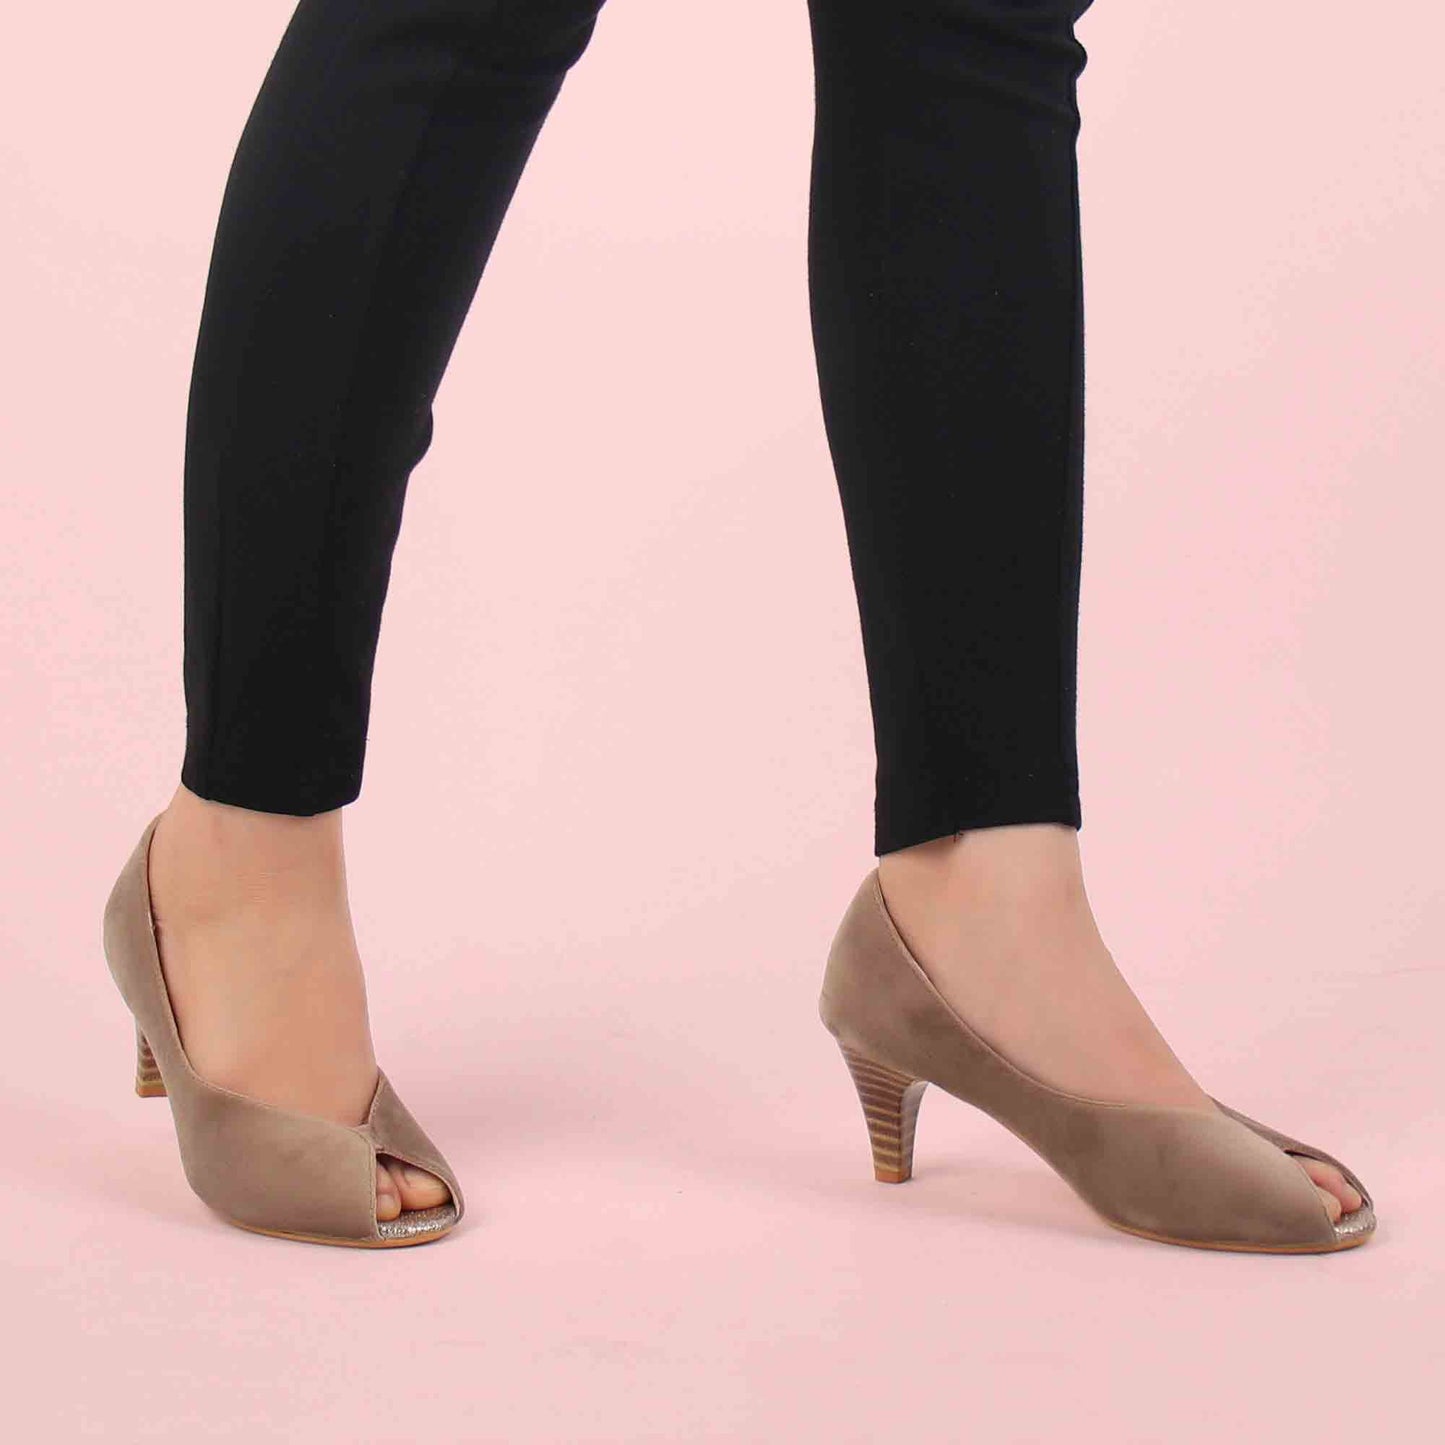 Foot Wear,The Stylish Sneaky Brown Heels - Cippele Multi Store